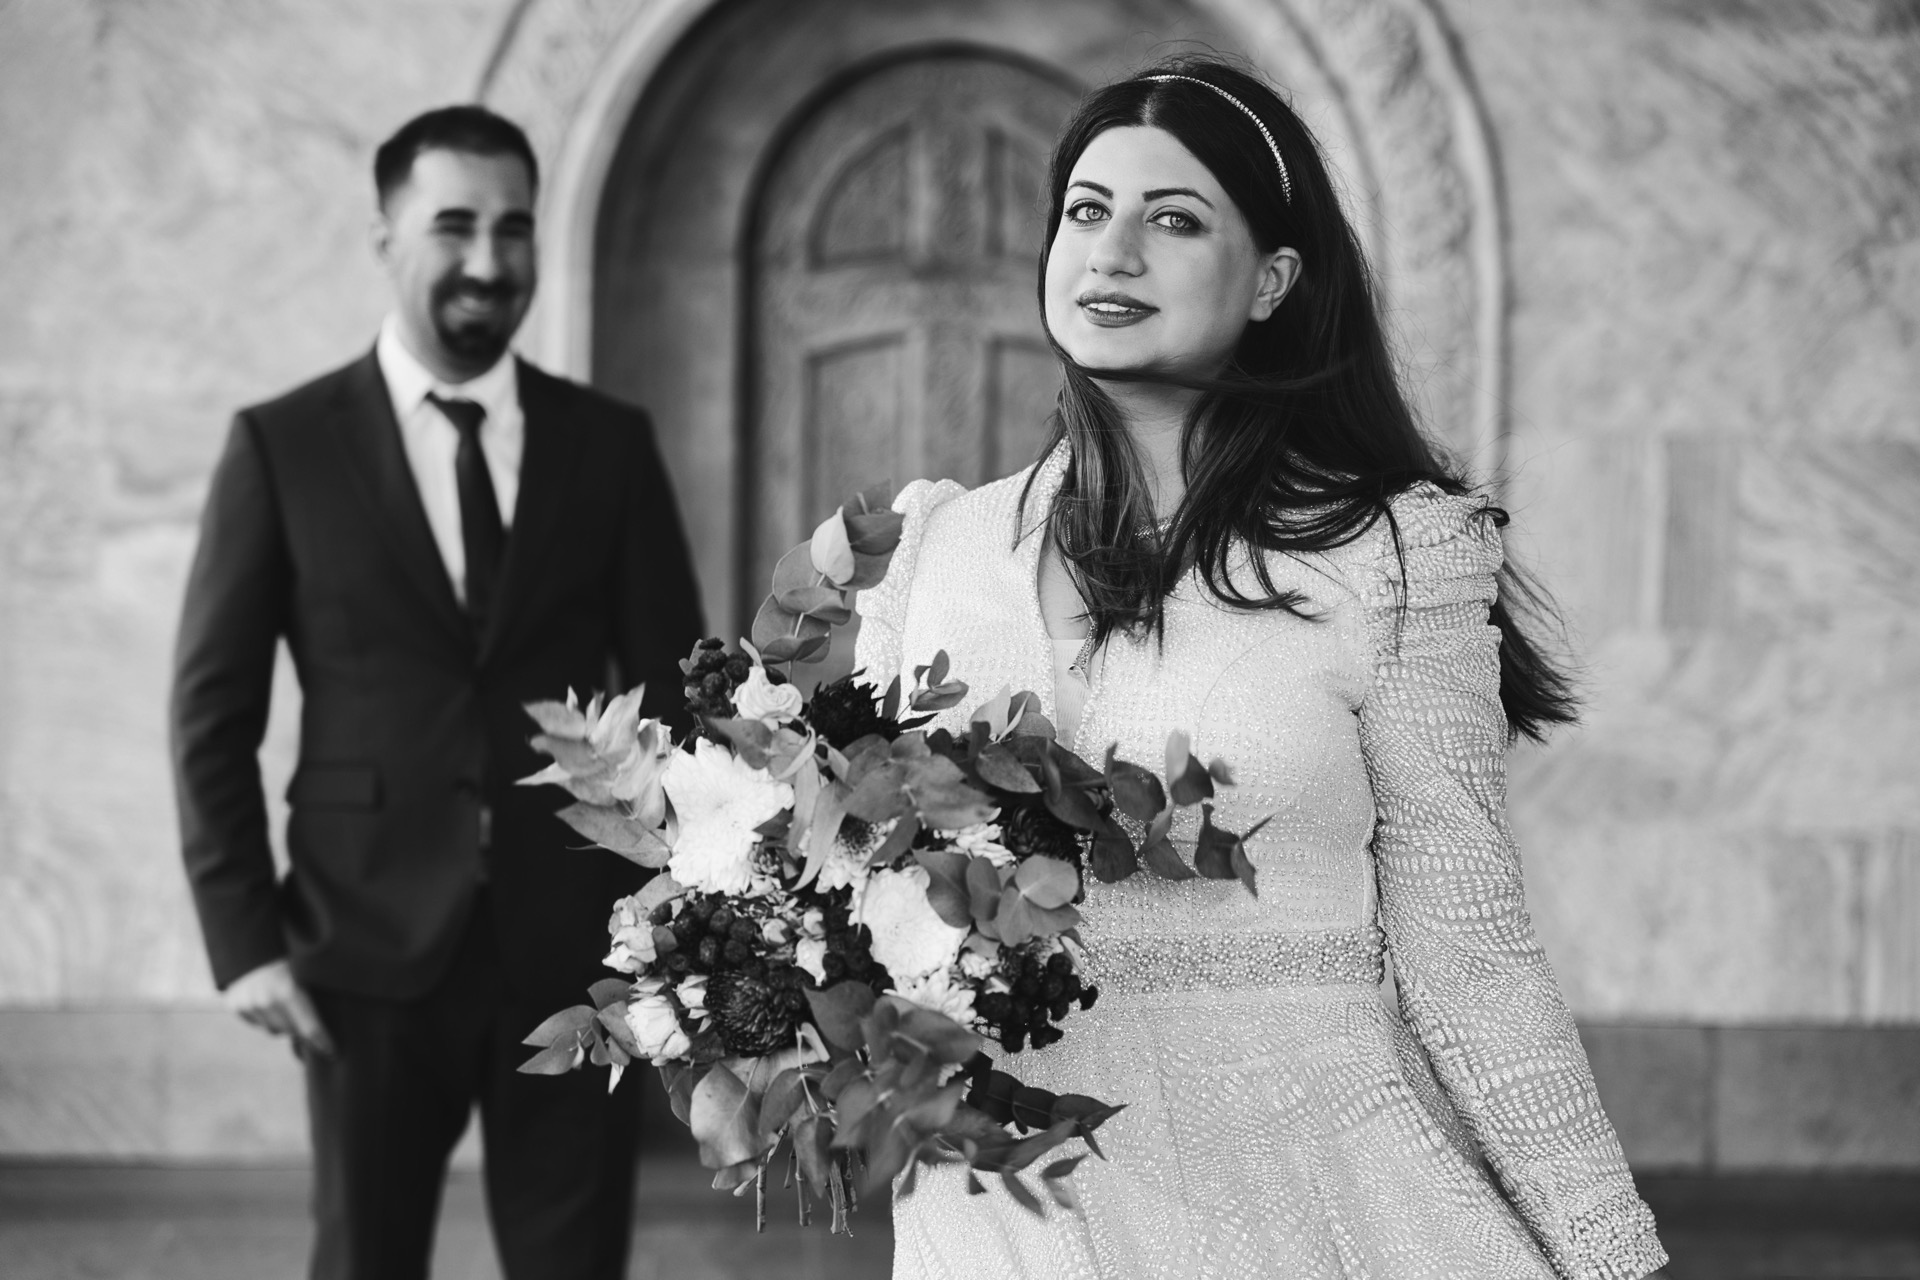 Fatemeh and Omid's wedding photo shoot in Tbilisi Georgia